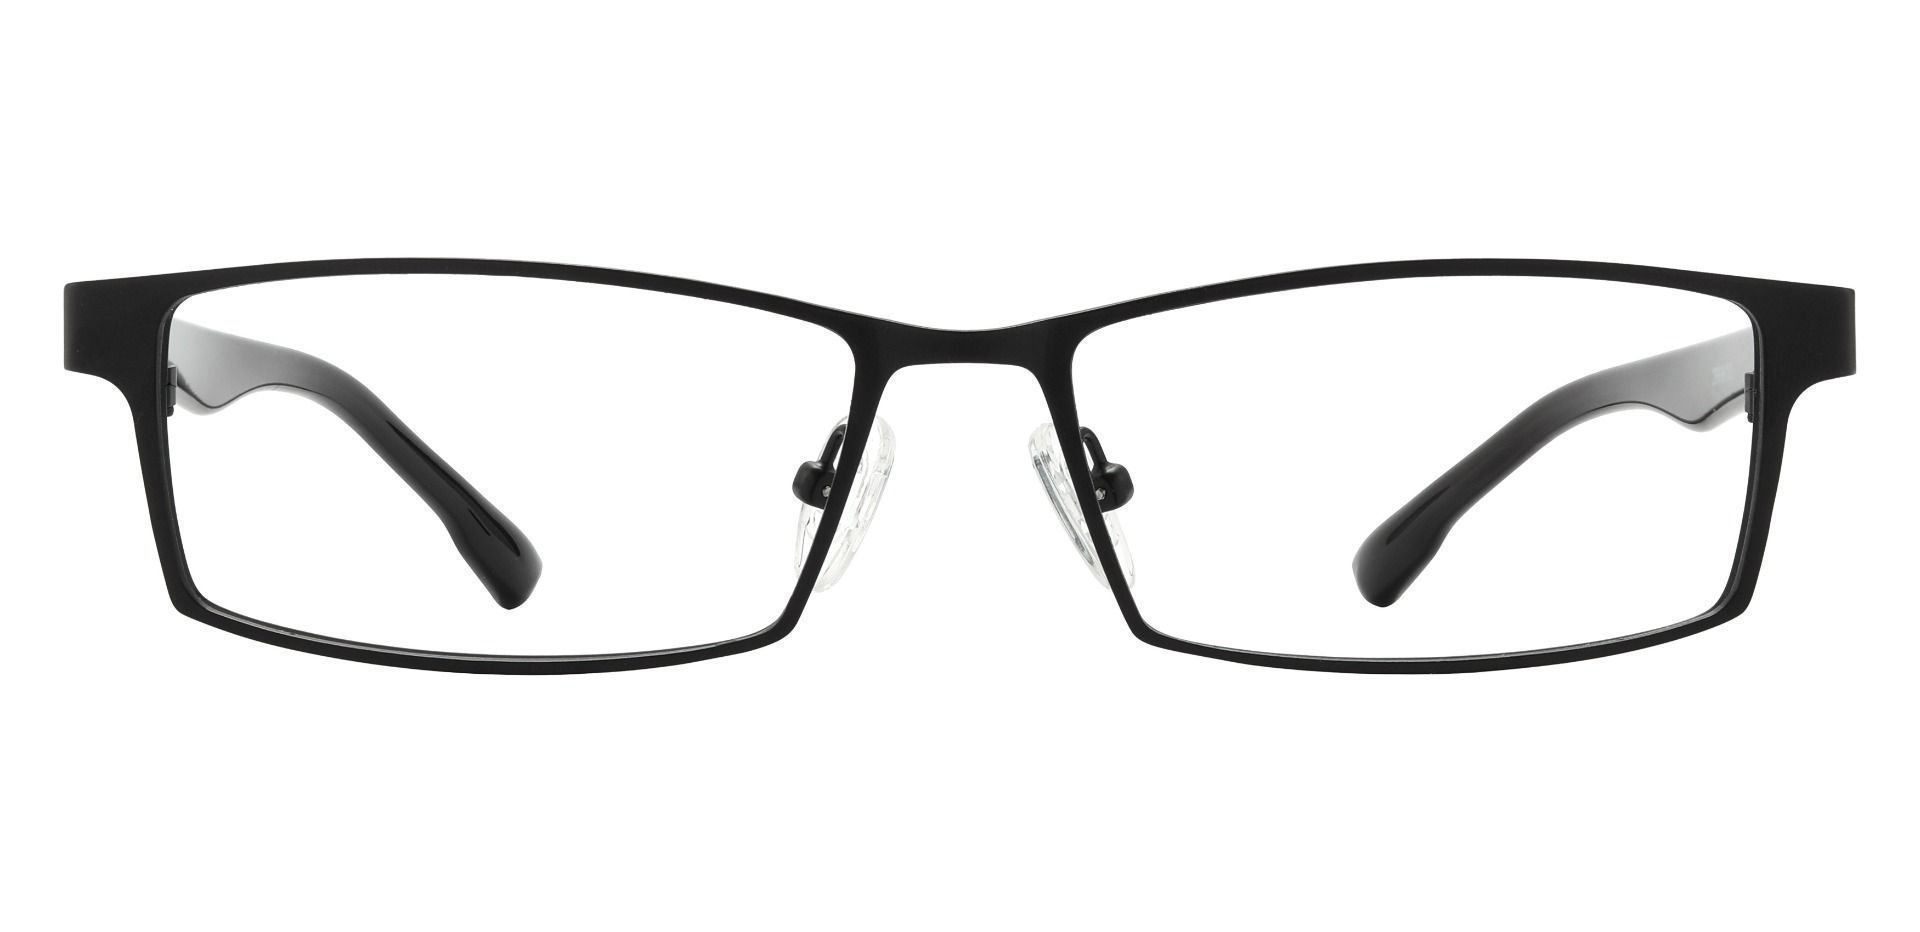 Alameda Rectangle Single Vision Glasses - Black